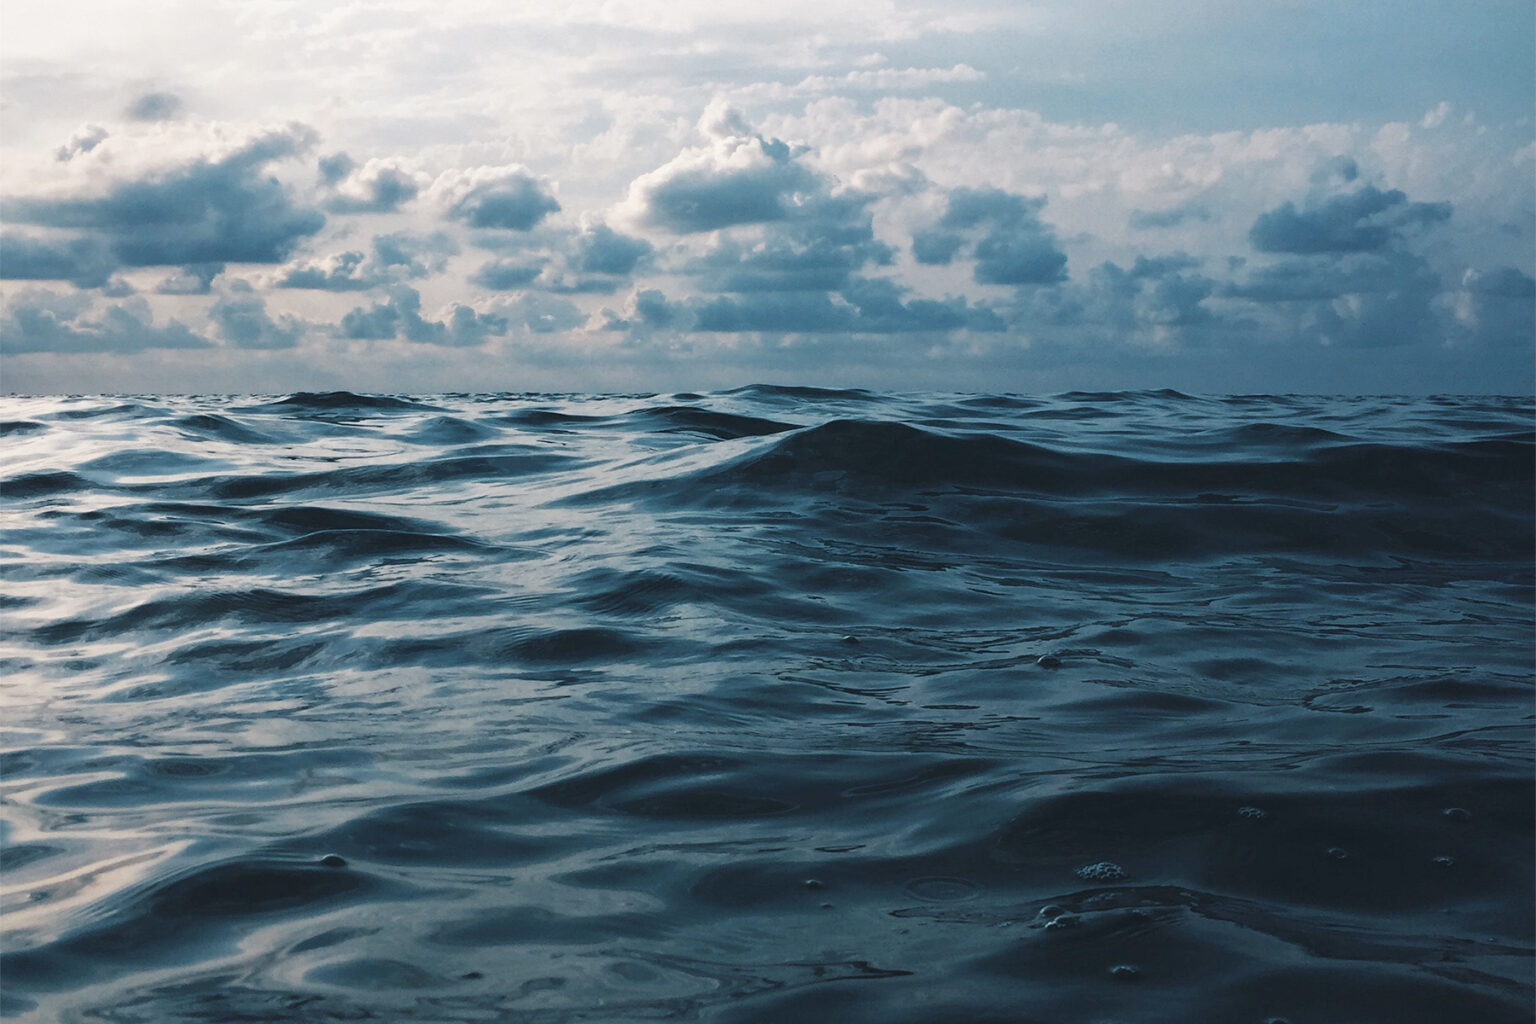 dark blue ocean waves ripple under a cloudy sky